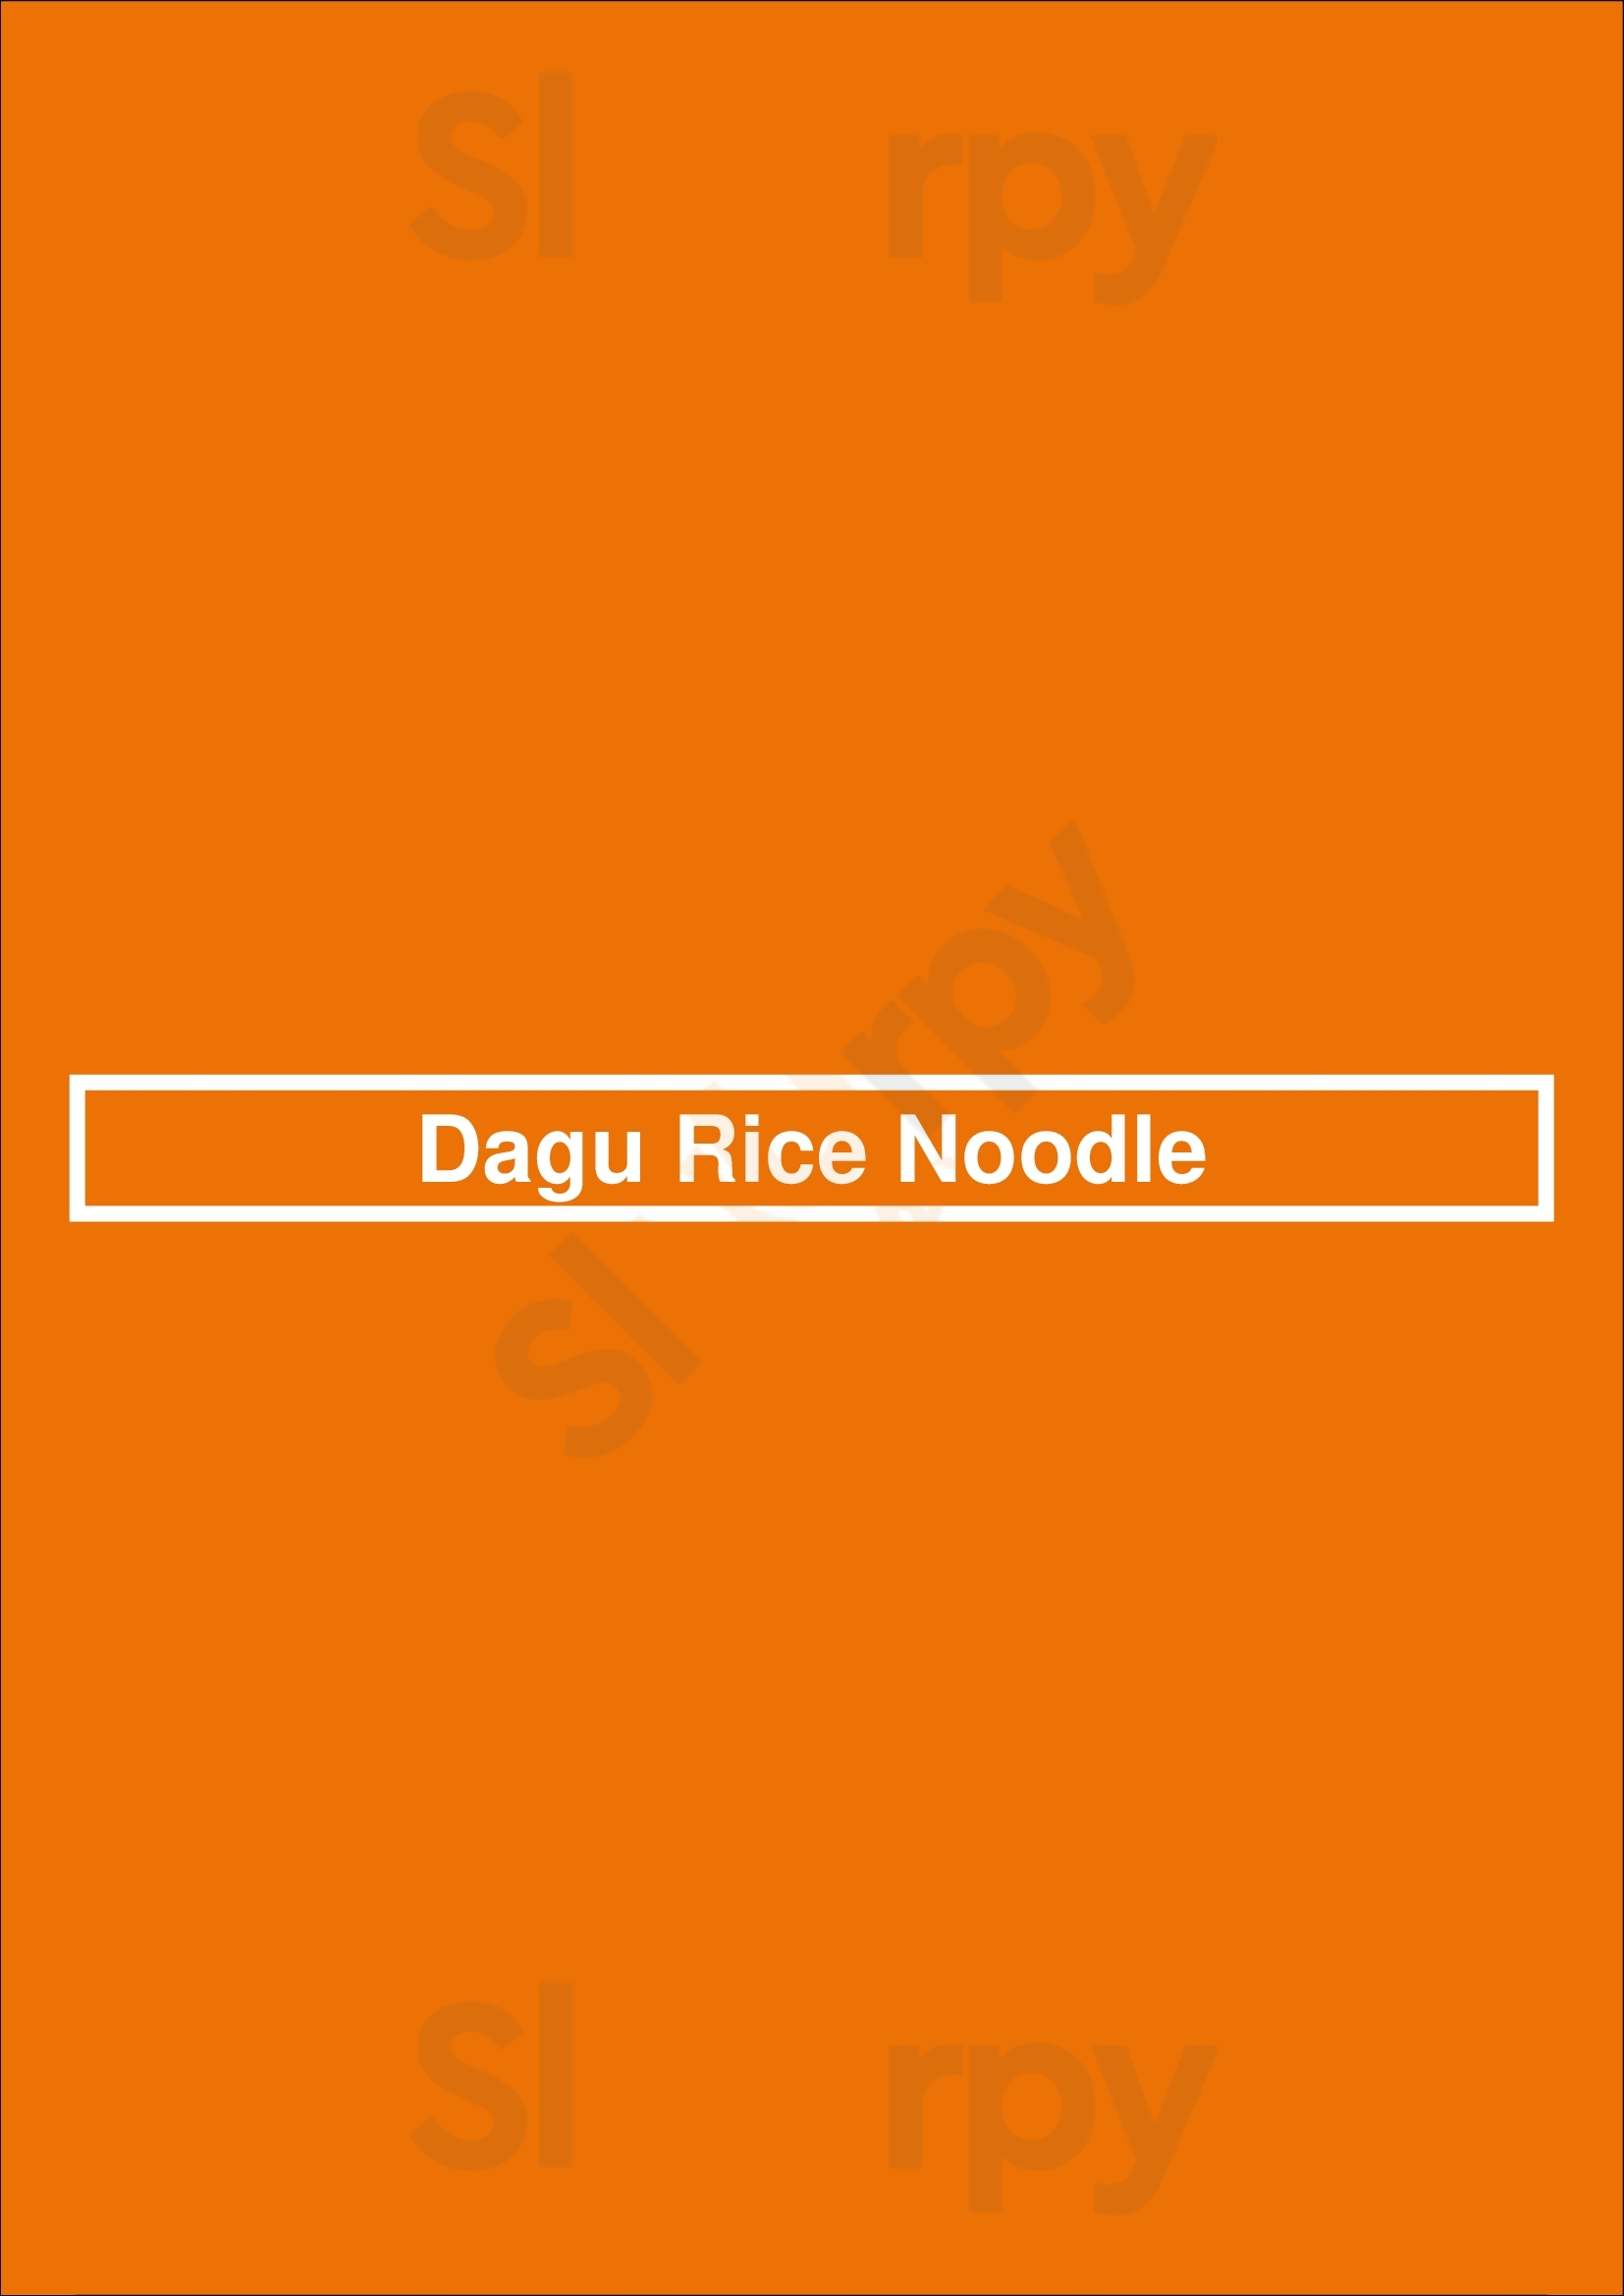 Dagu Rice Noodle Mississauga Menu - 1